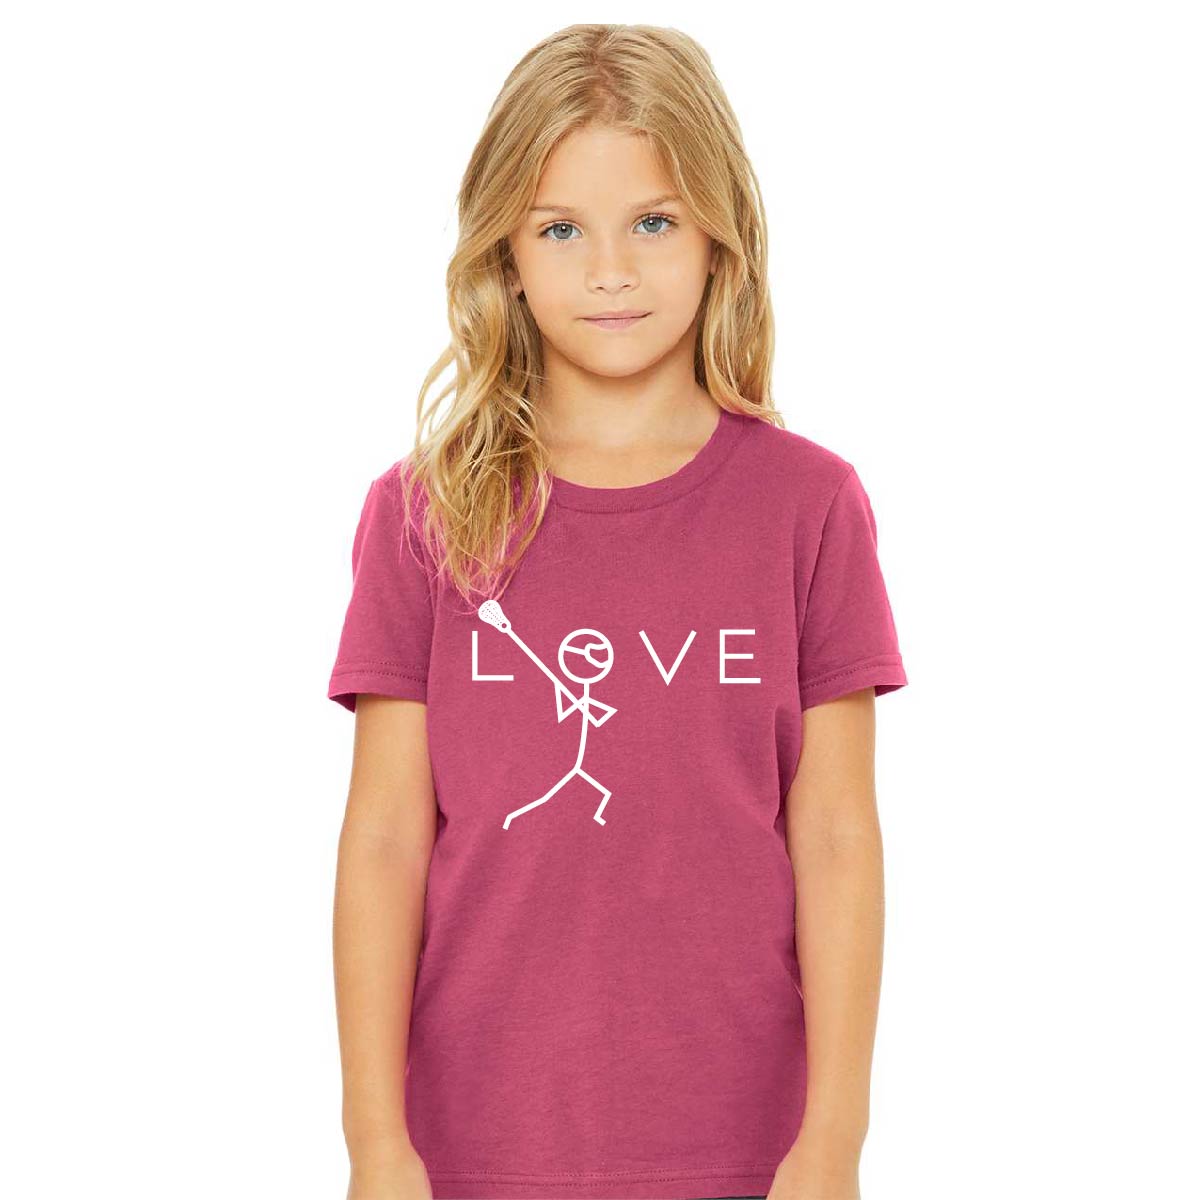 Lacrosse (Girls) Youth T-shirt